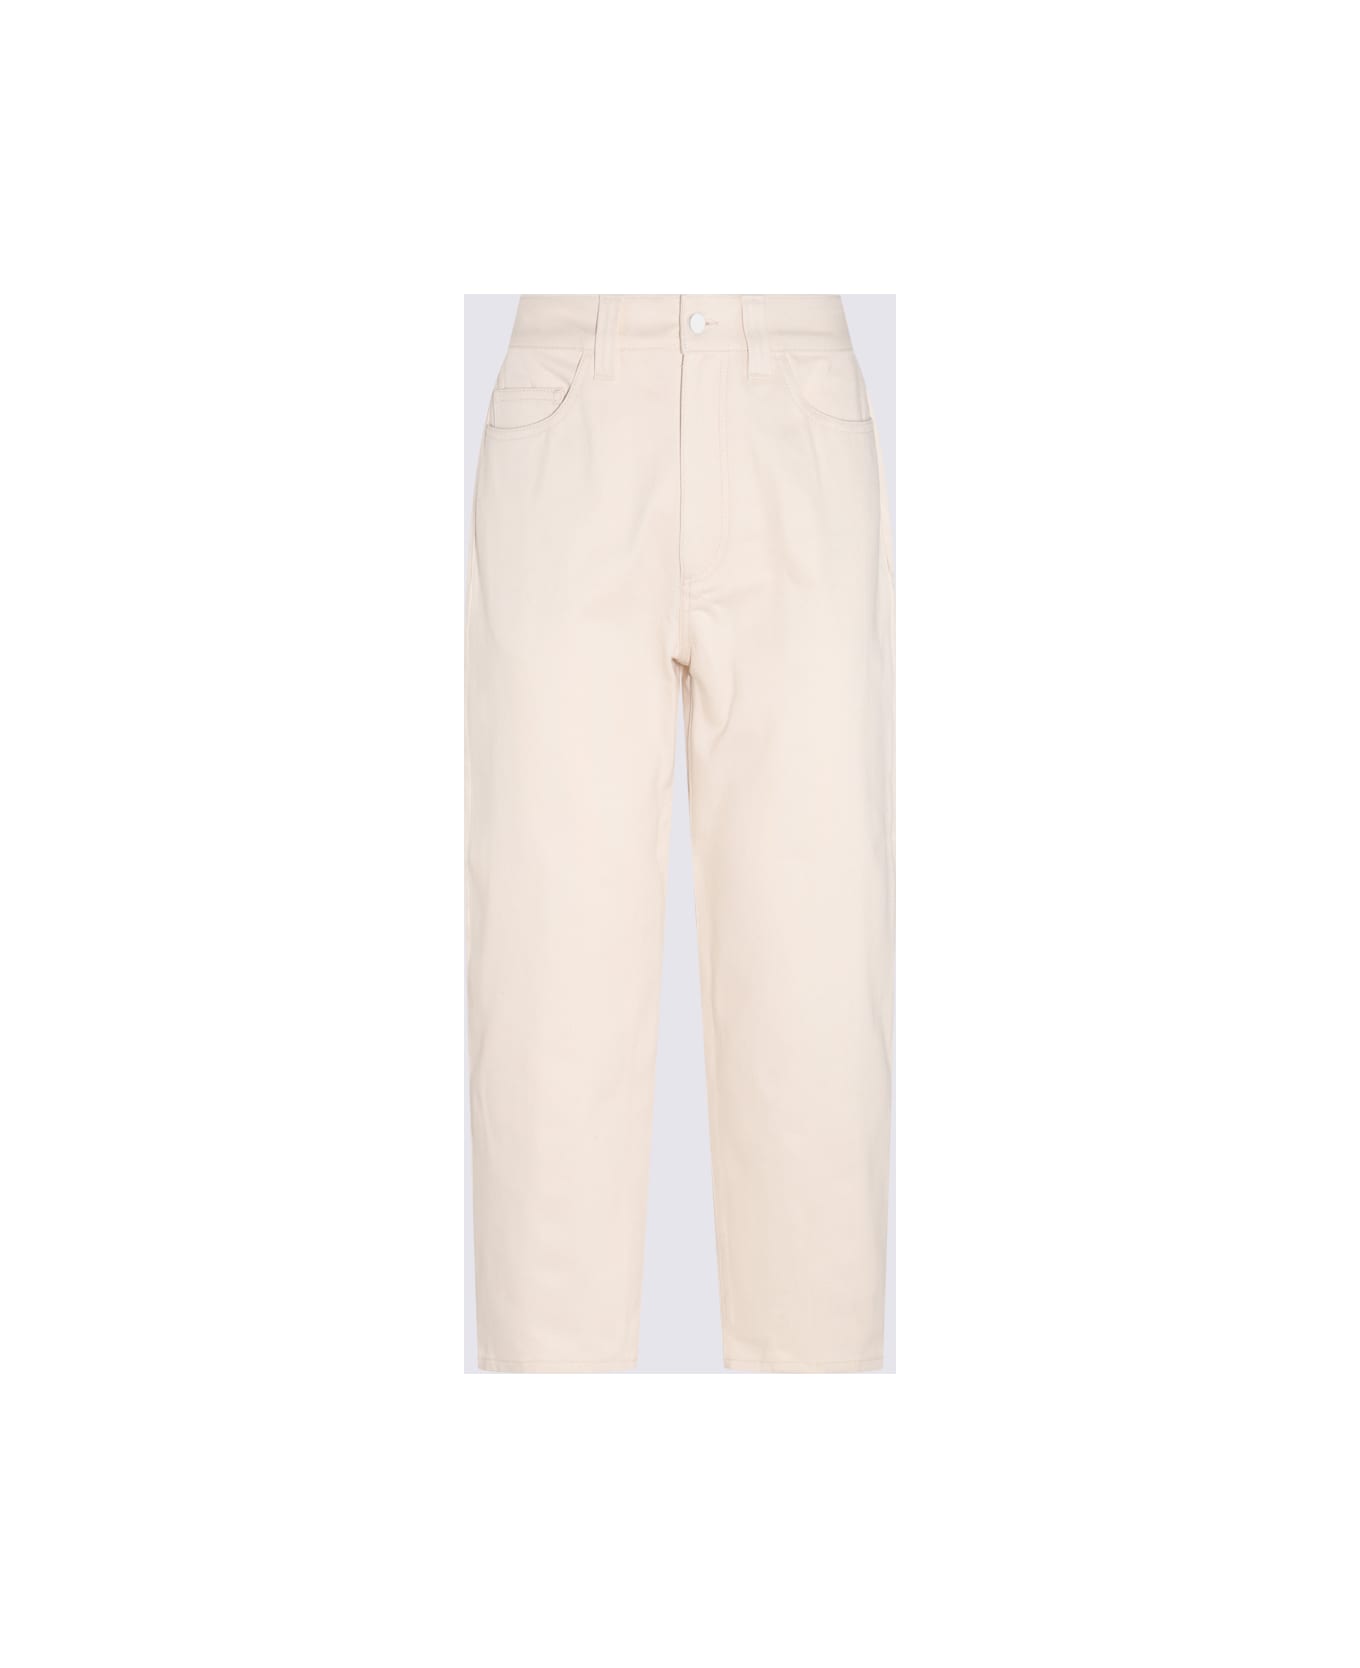 Sunnei Ecru White Stripes Cotton Pants - ECRU WHITE STRIPES